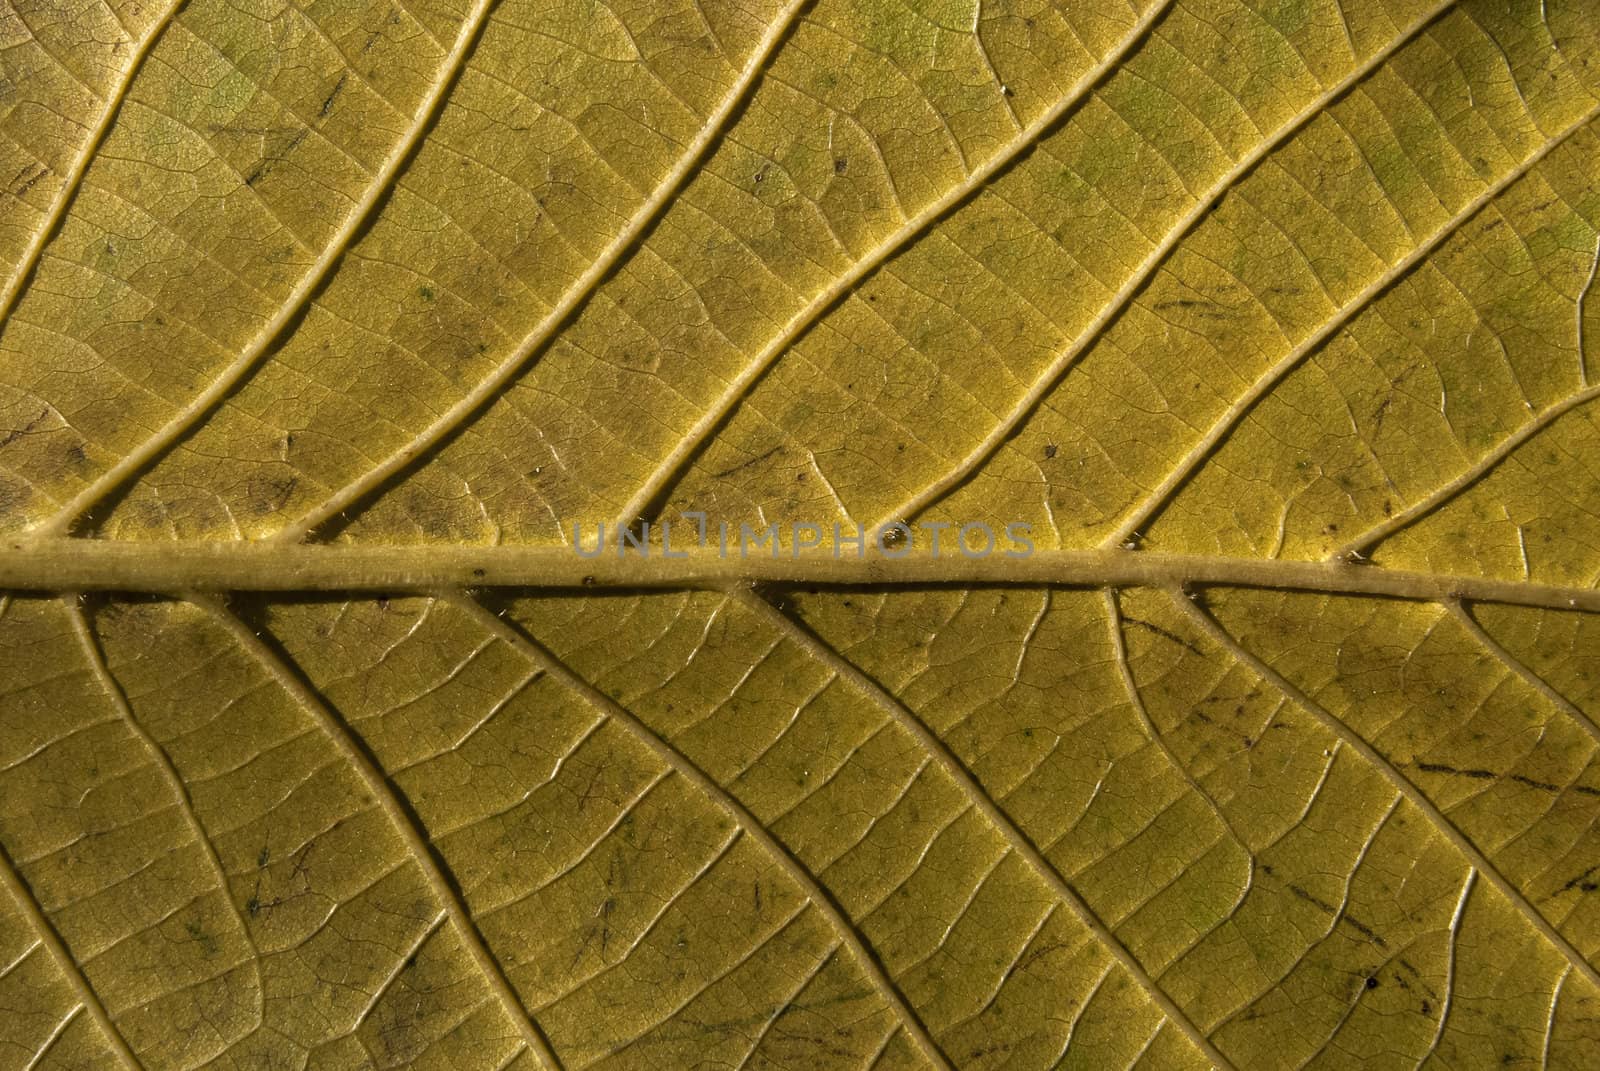 Autumn leaf vein structure underside green color as background